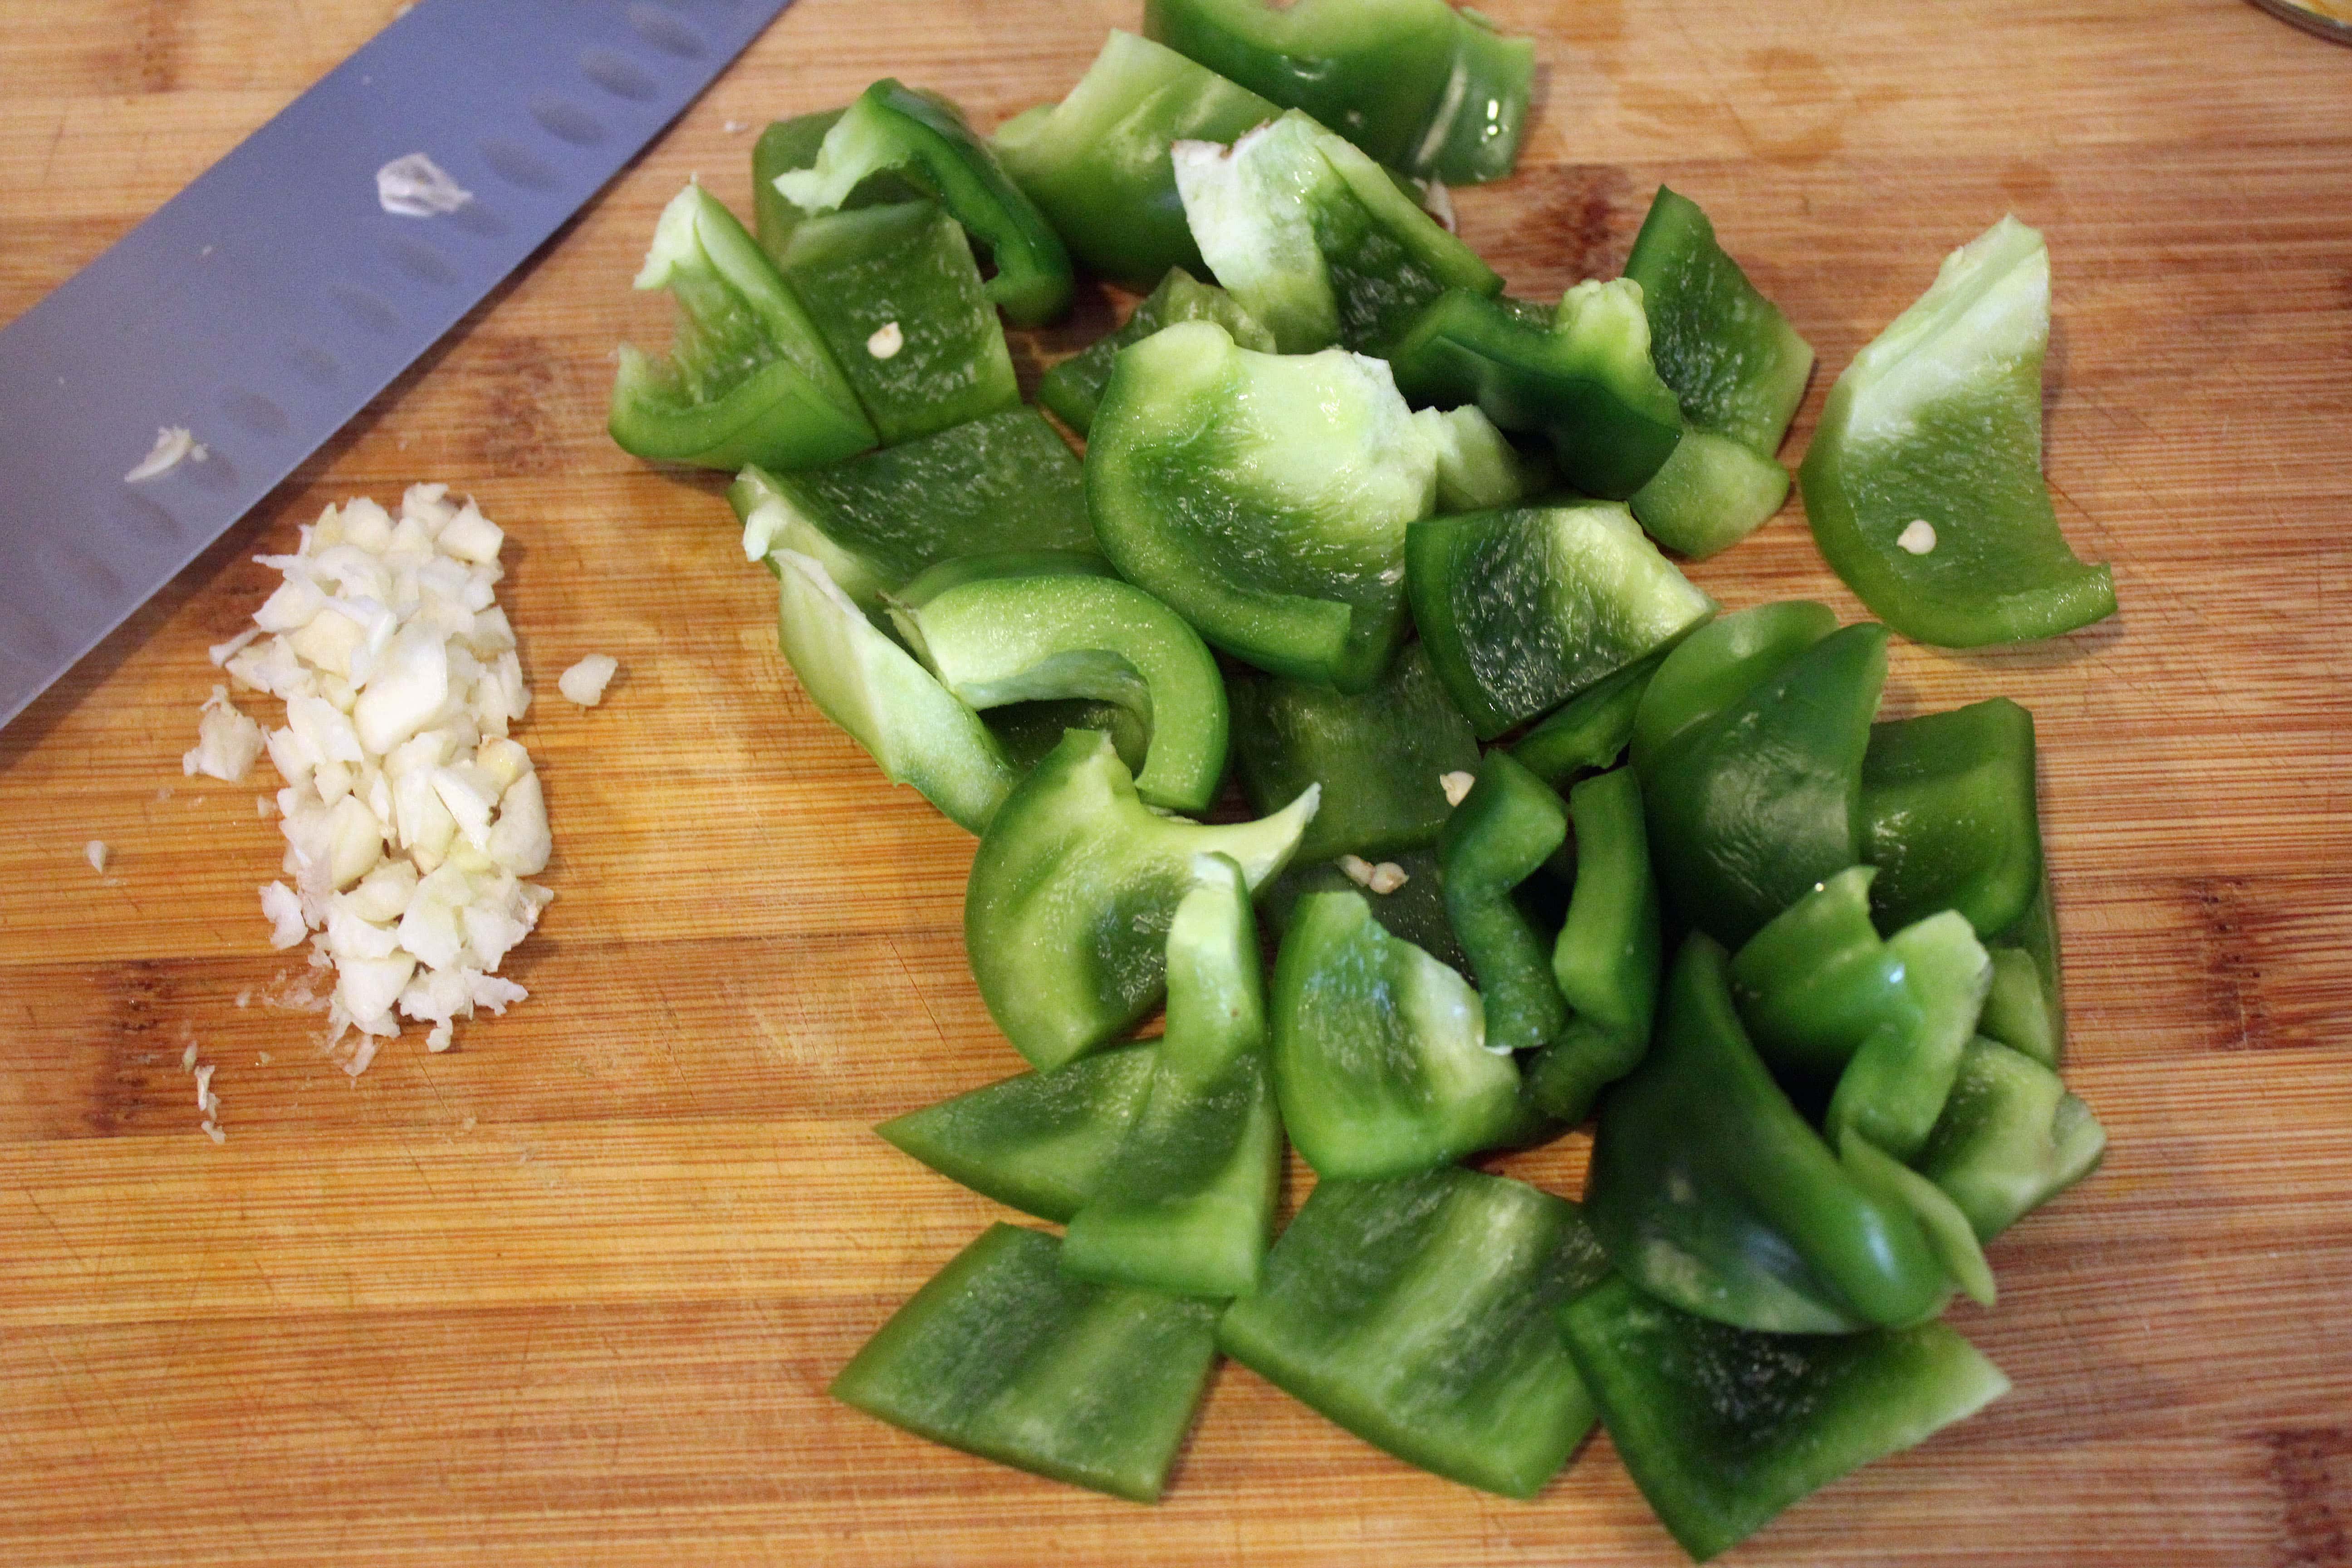 Cut up veggies to prep